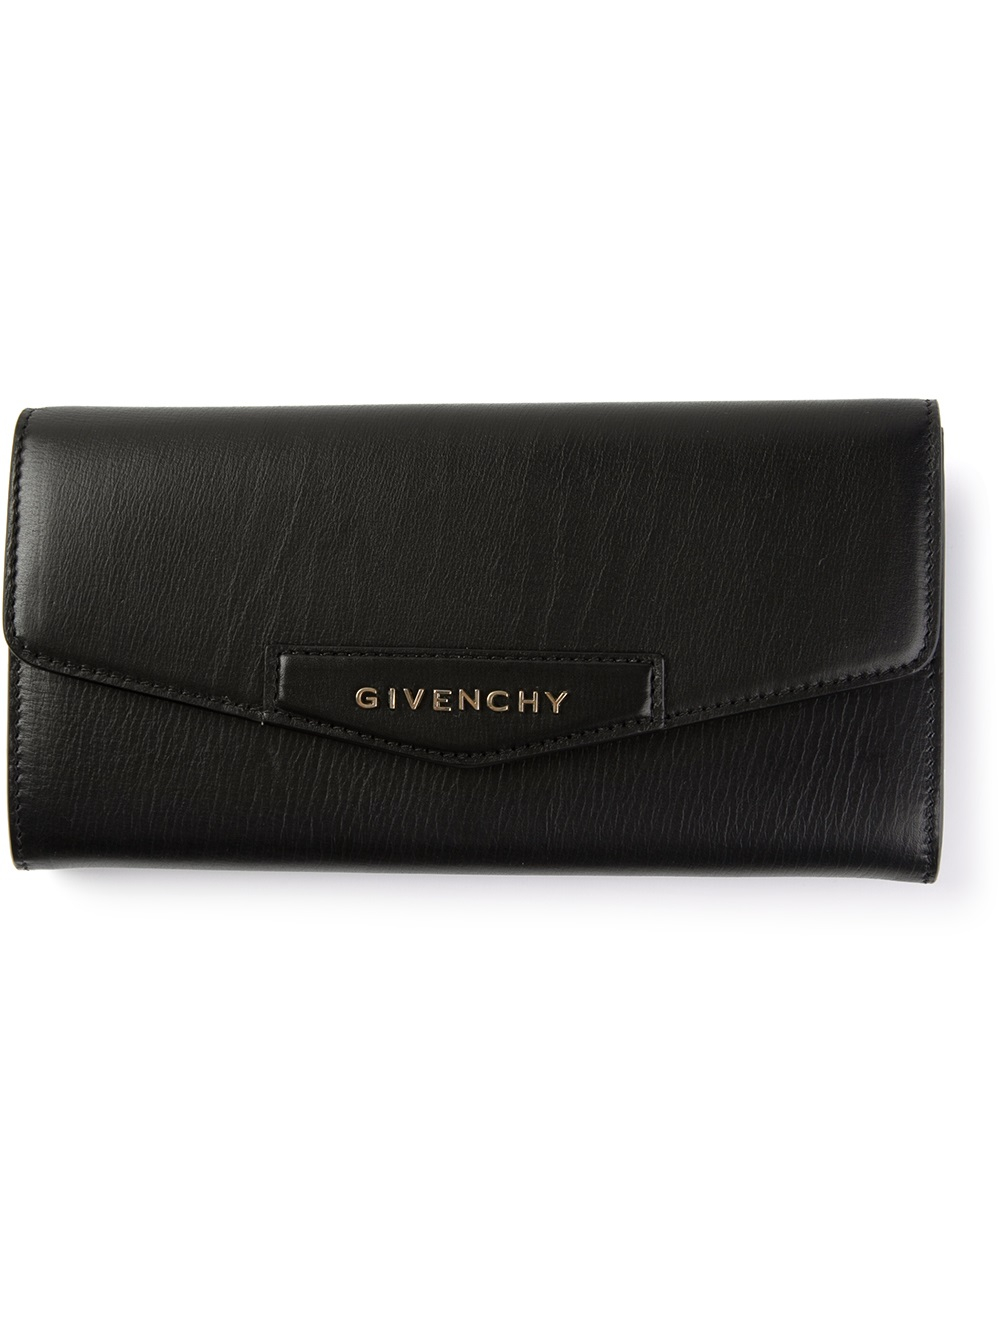 Givenchy Antigona Wallet in Black - Lyst